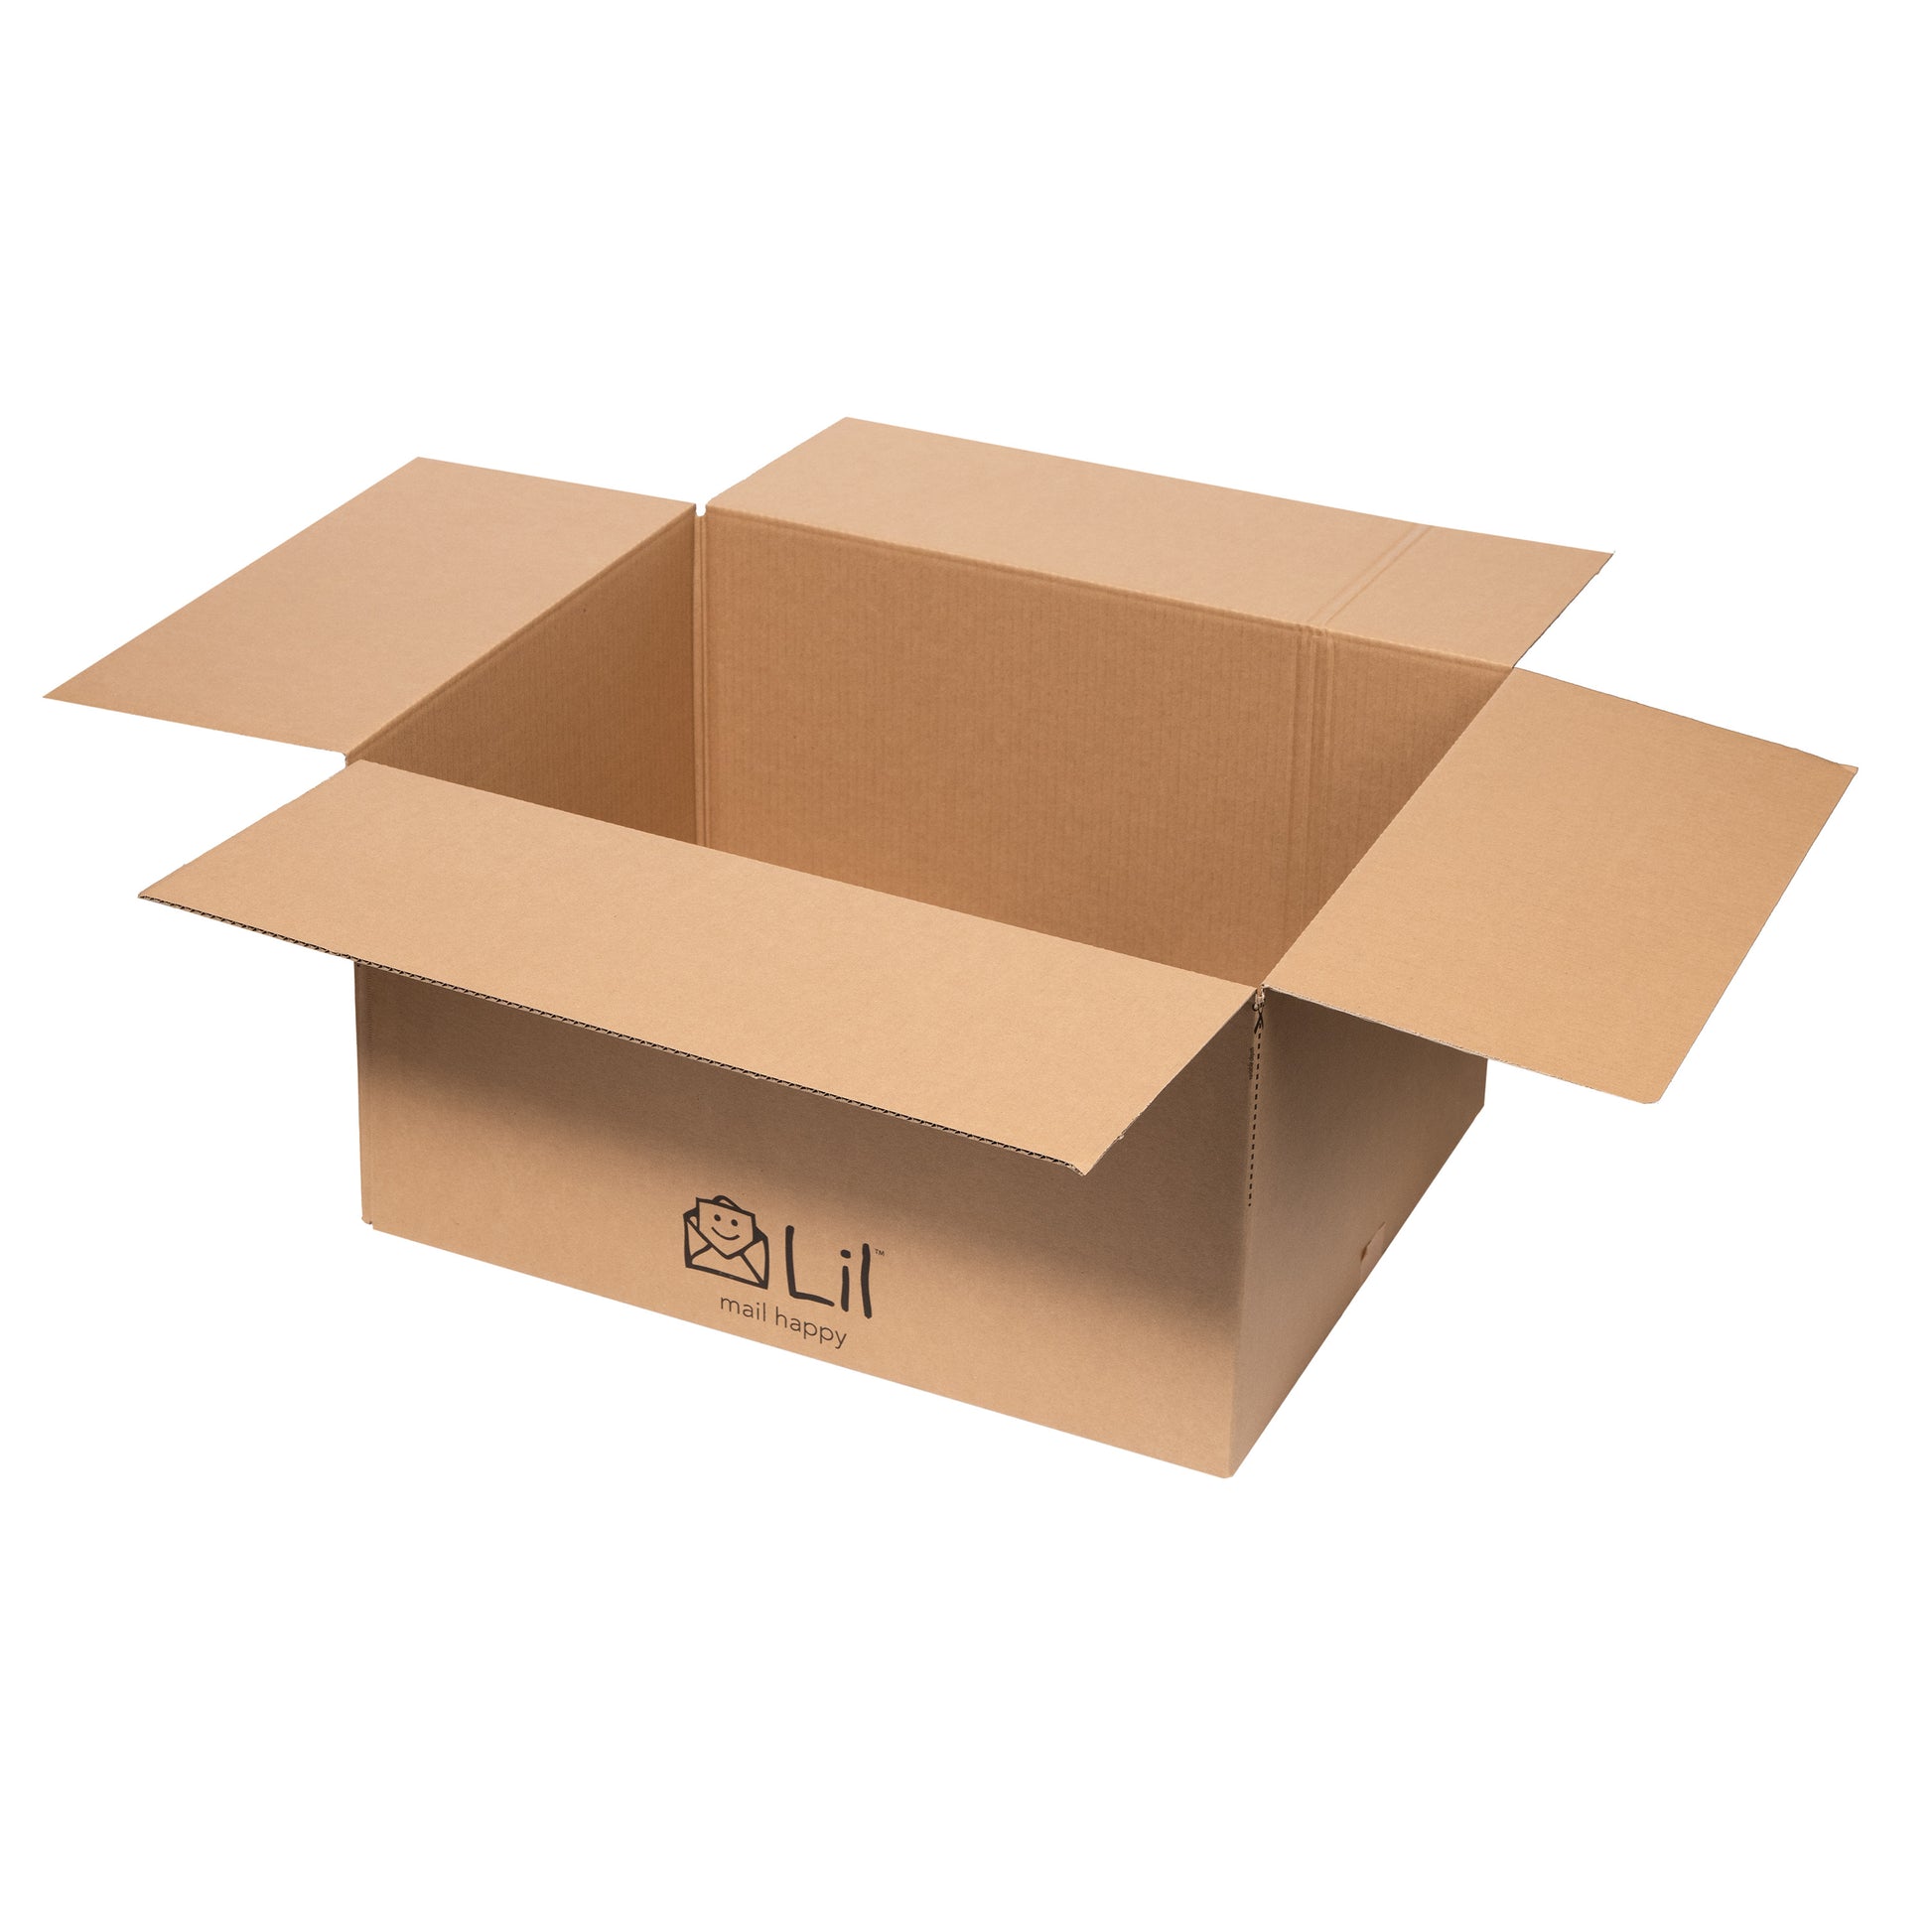 K20 Single Walled Cardboard Box | Lil Packaging